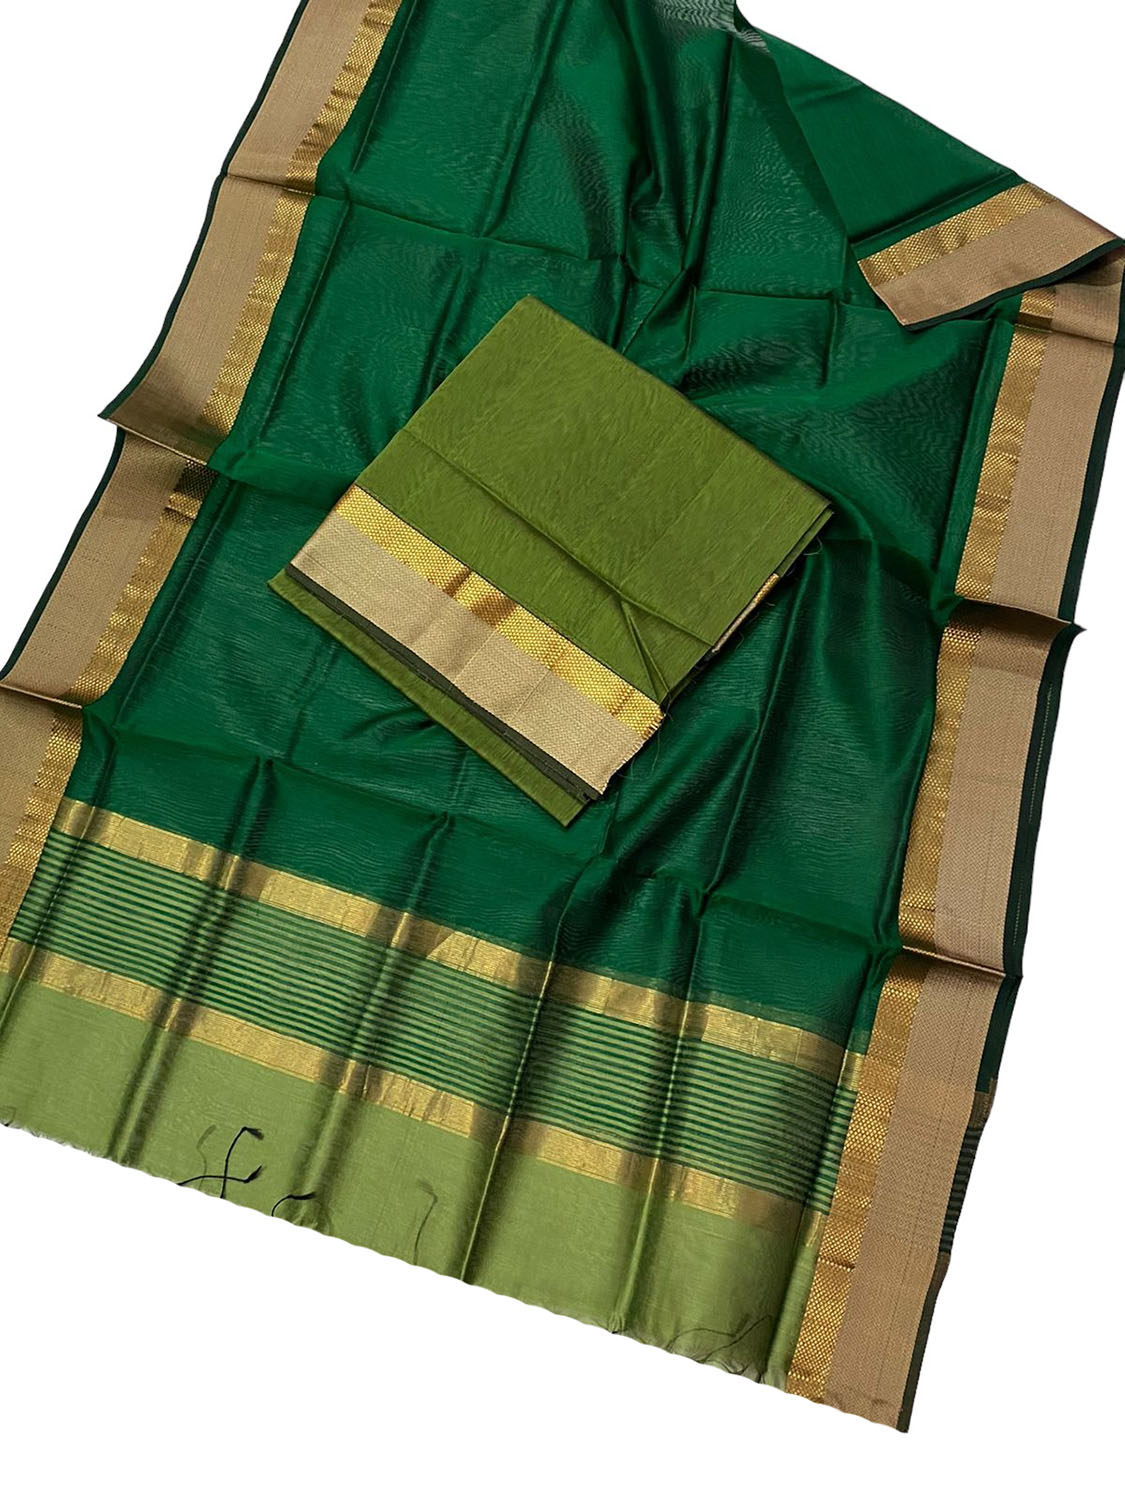 Get the Latest Green Maheshwari Handloom Suit Set Online - Shop Now! - Luxurion World